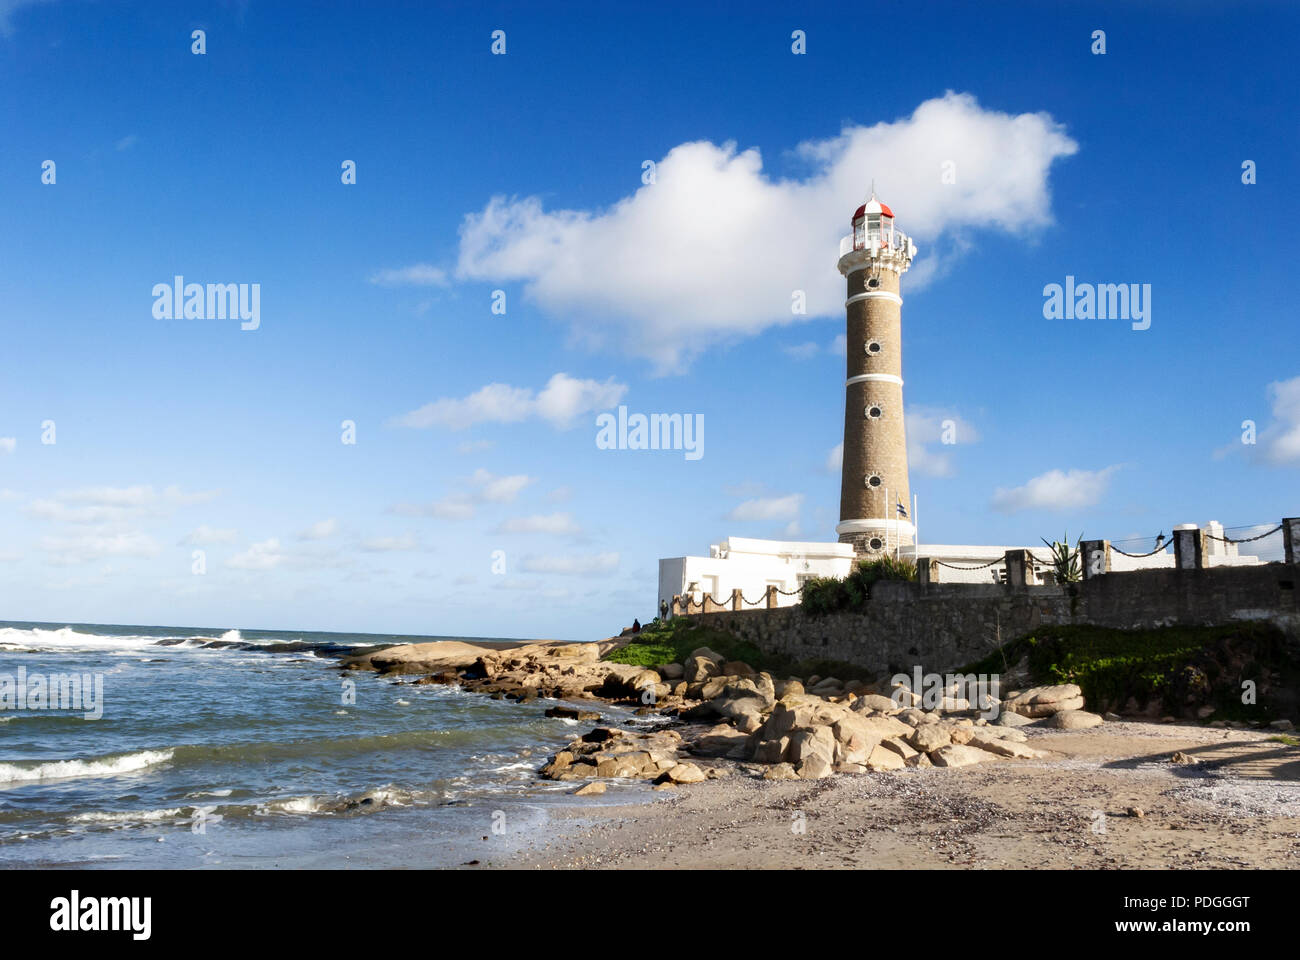 Sunny day and view to the famous lighthouse on Jose Ignacio beach, Punta del Este, Uruguay. Stock Photo